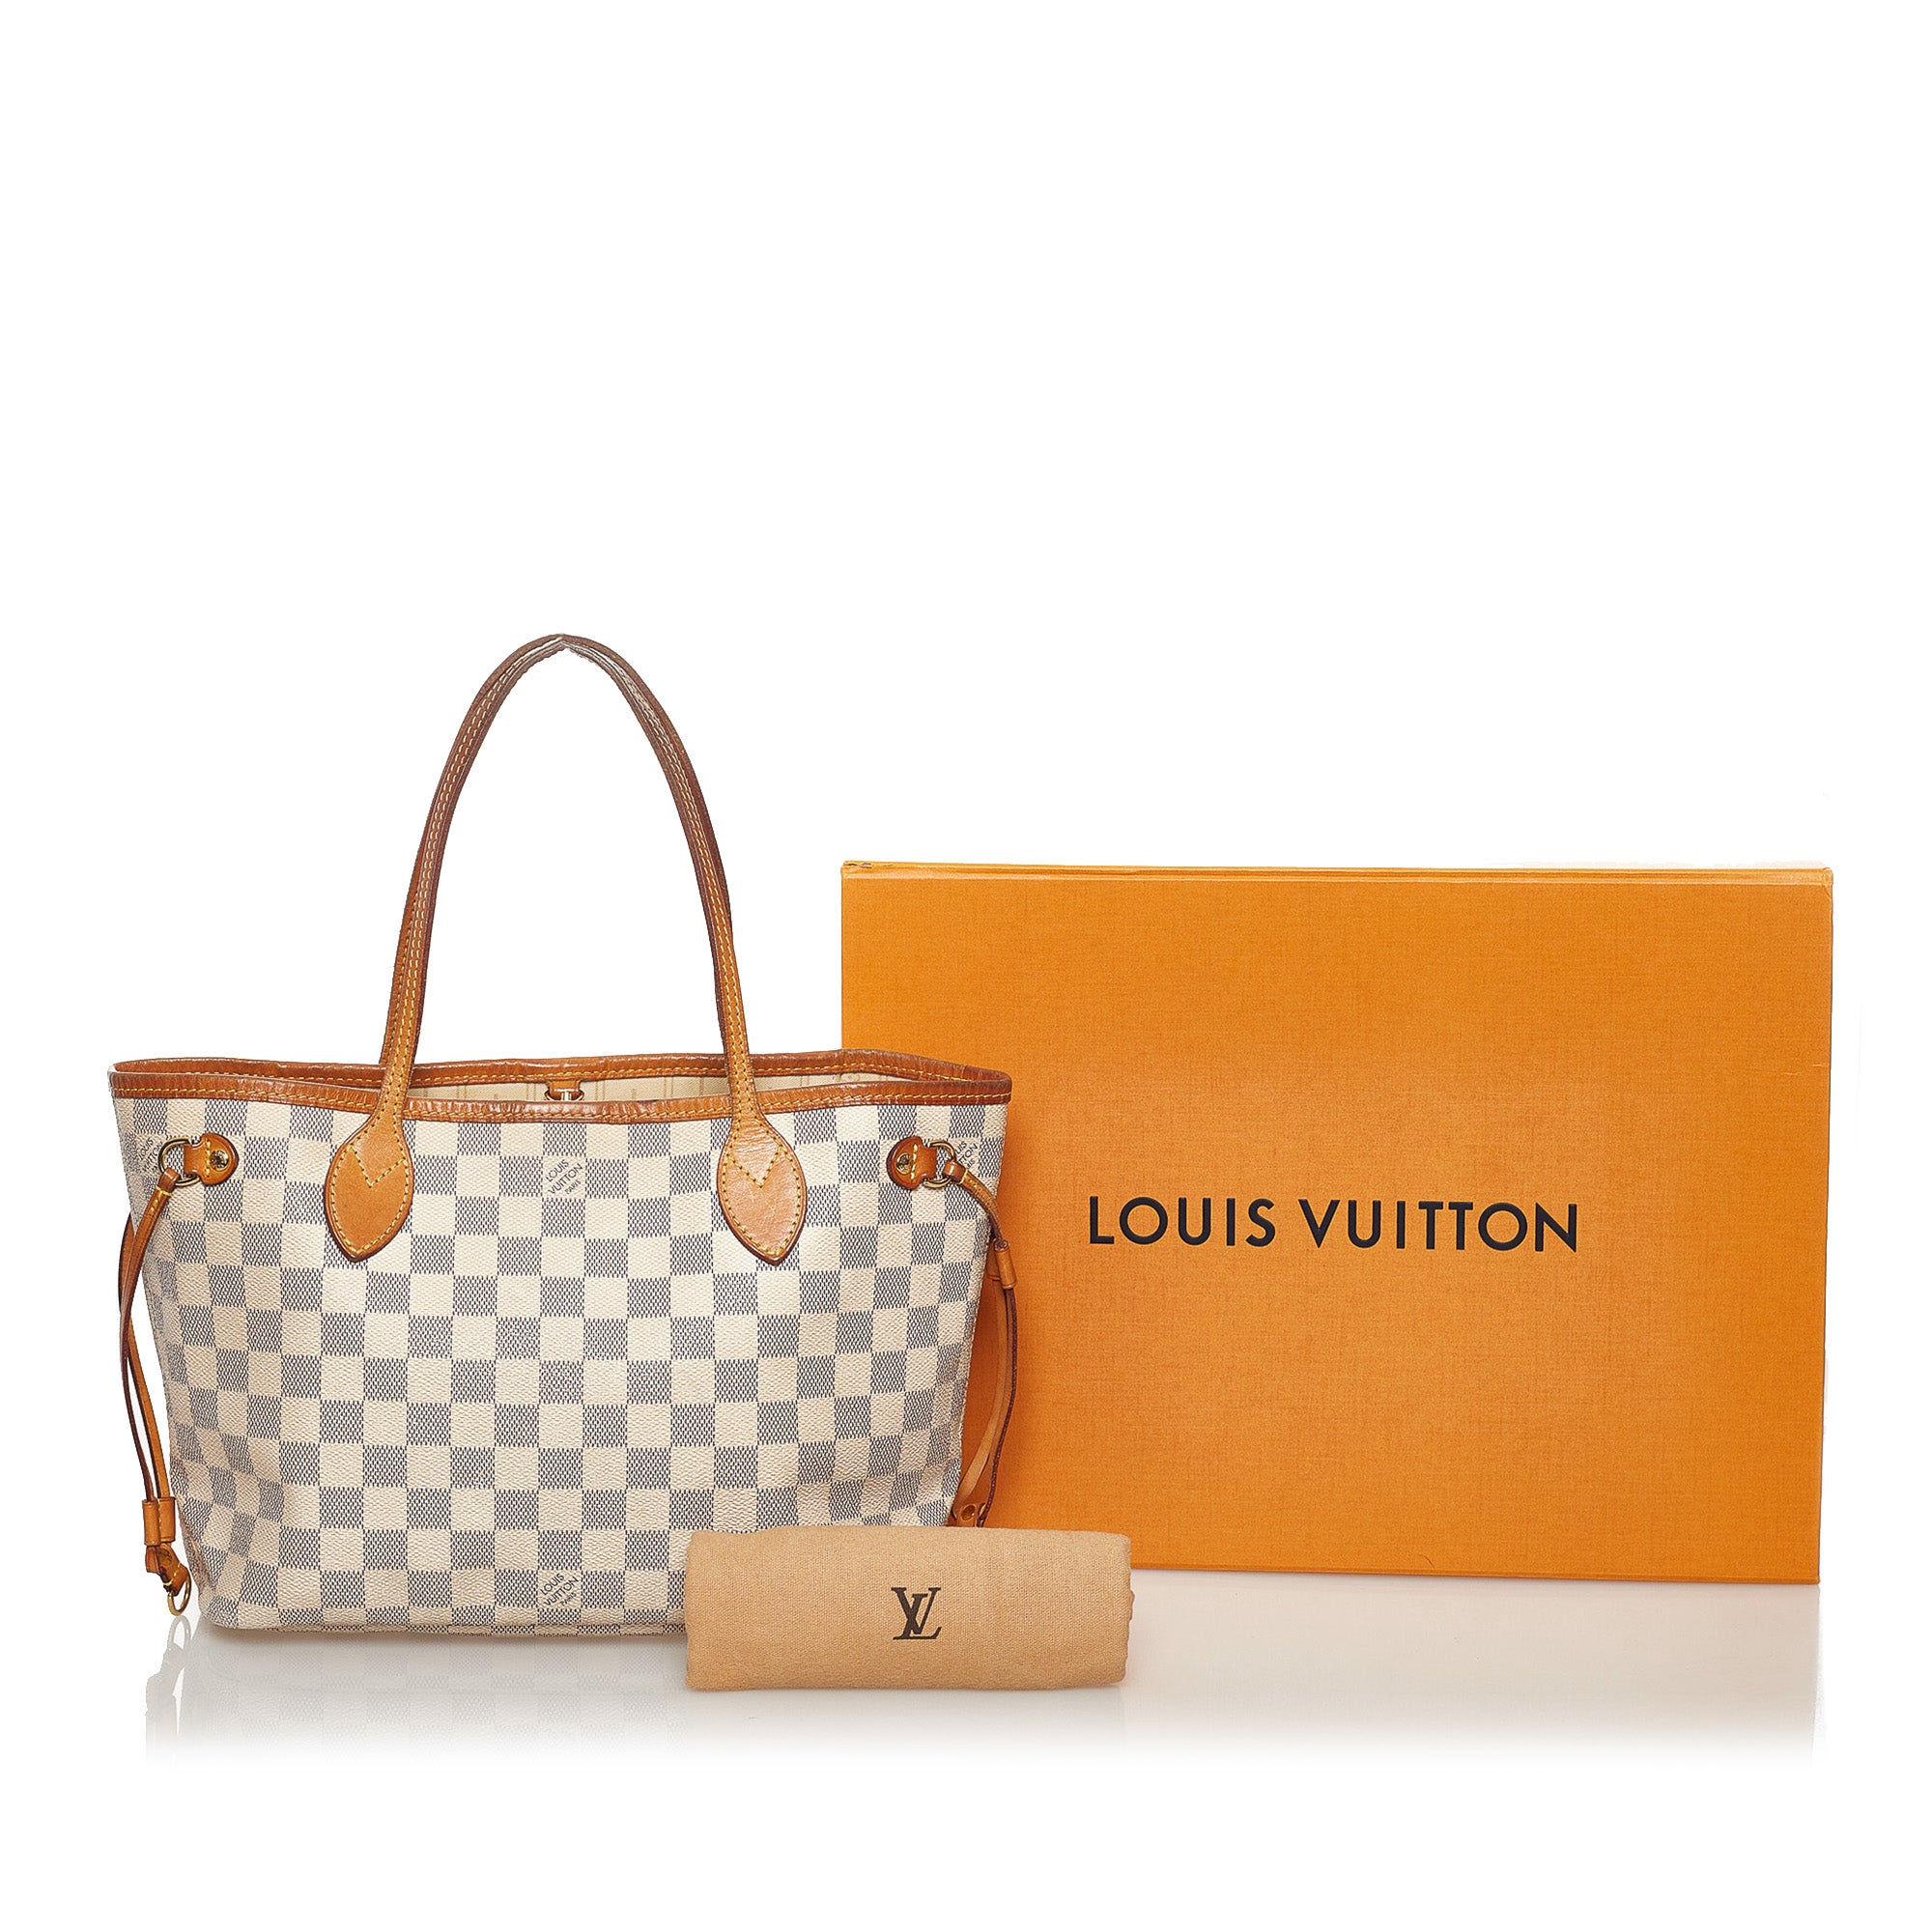 Louis Vuitton, Bags, Louis Vuitton Neverfull Tote In Damier Azur Pm